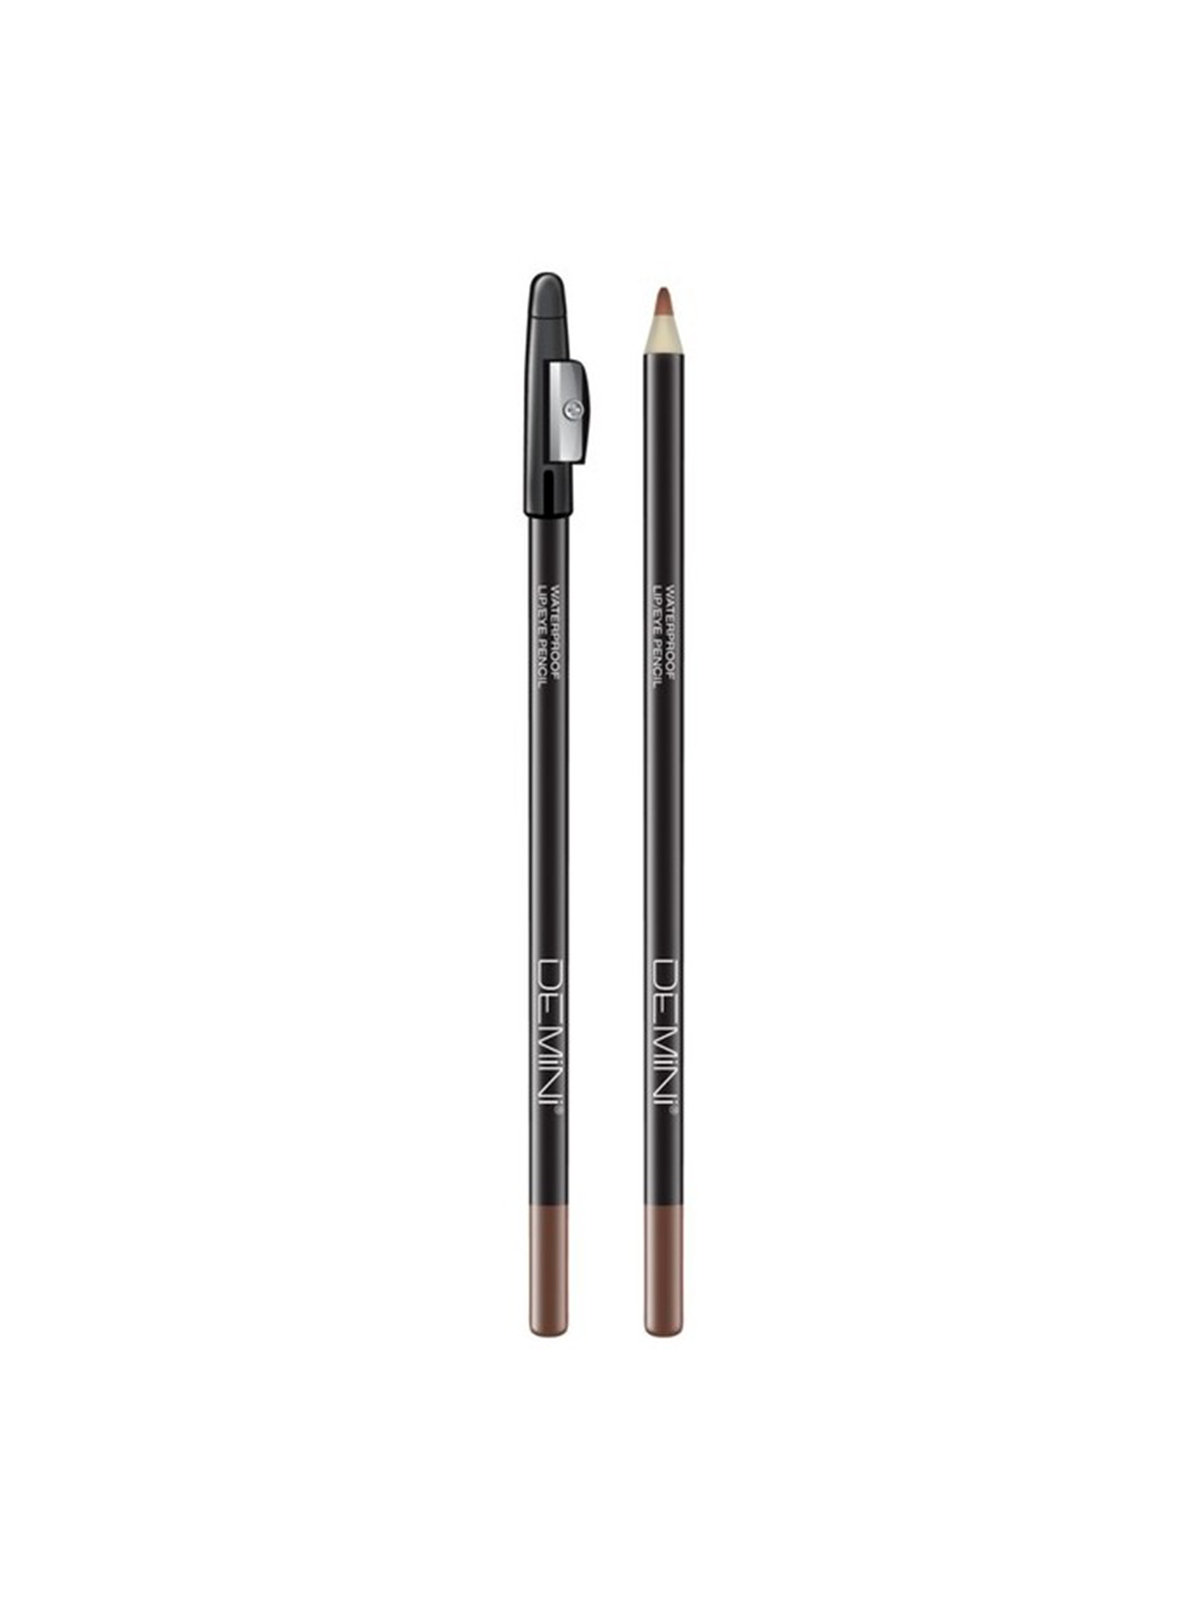 DeMiNi Карандаш косметический для губ/глаз водостойкий  - Waterproof Lip/Eye Pencil № 032  1,8 г